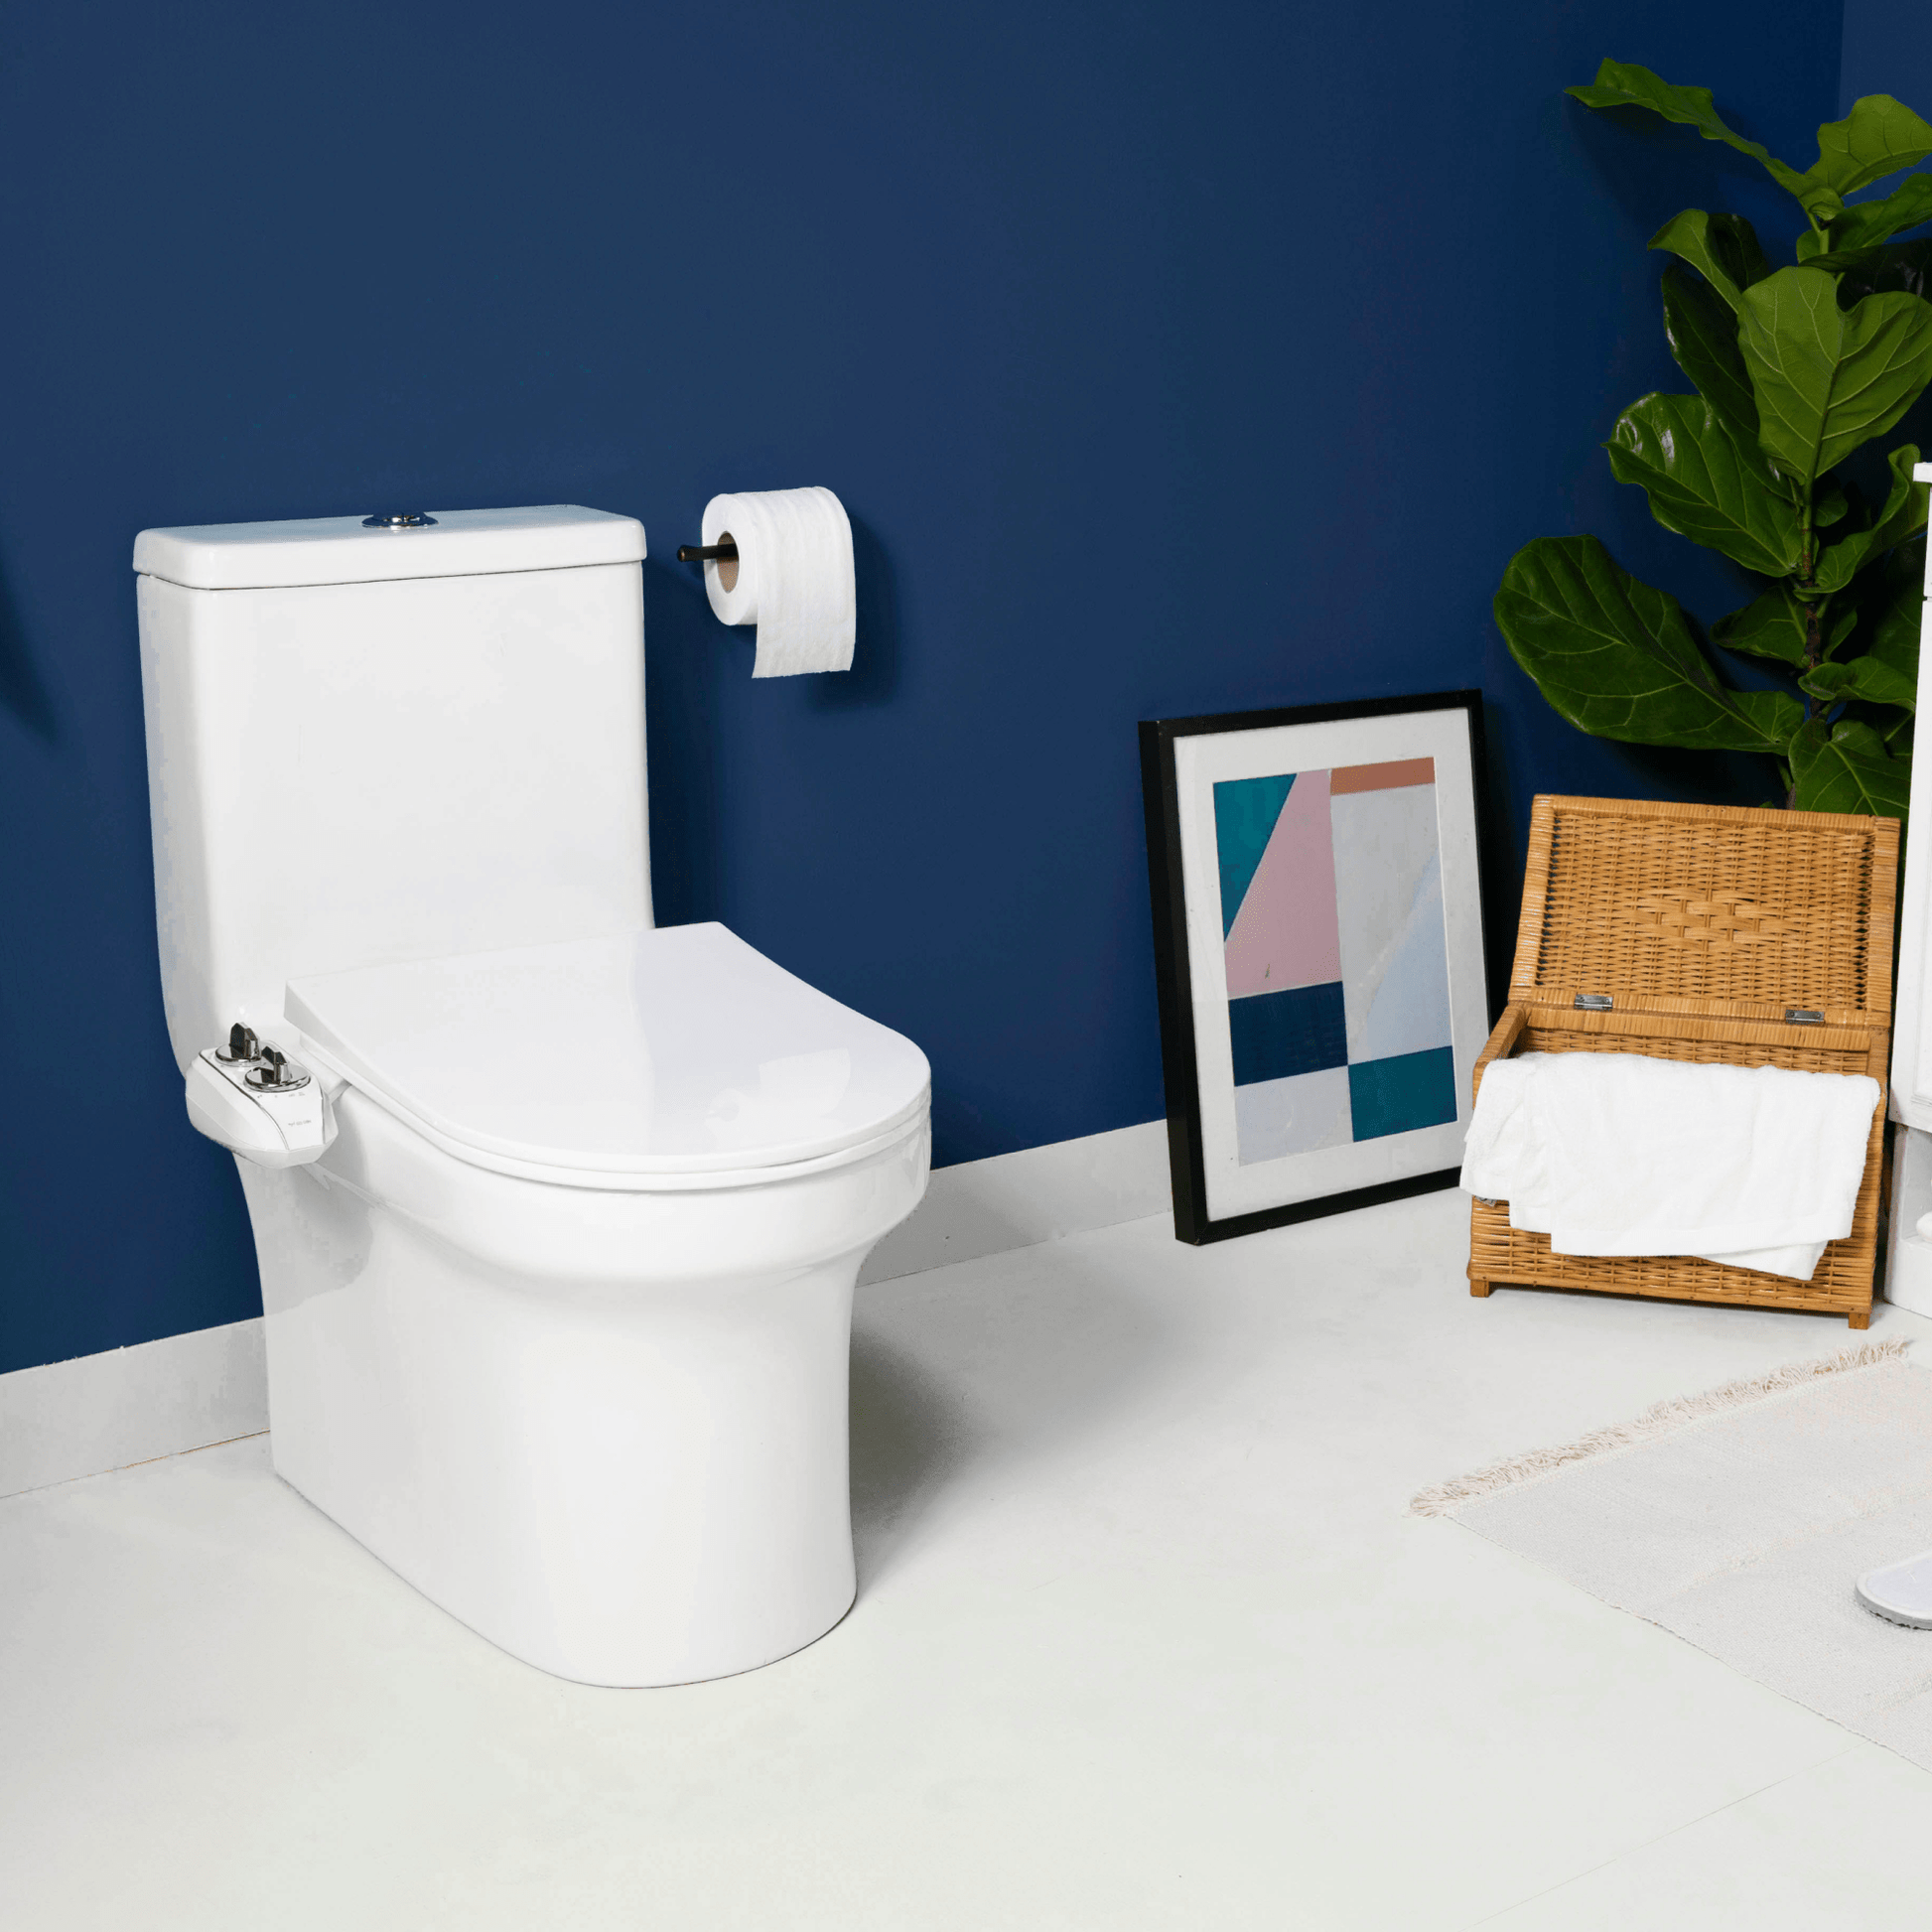 NEO 120 Plus Chrome elevates your bathroom to a modern style